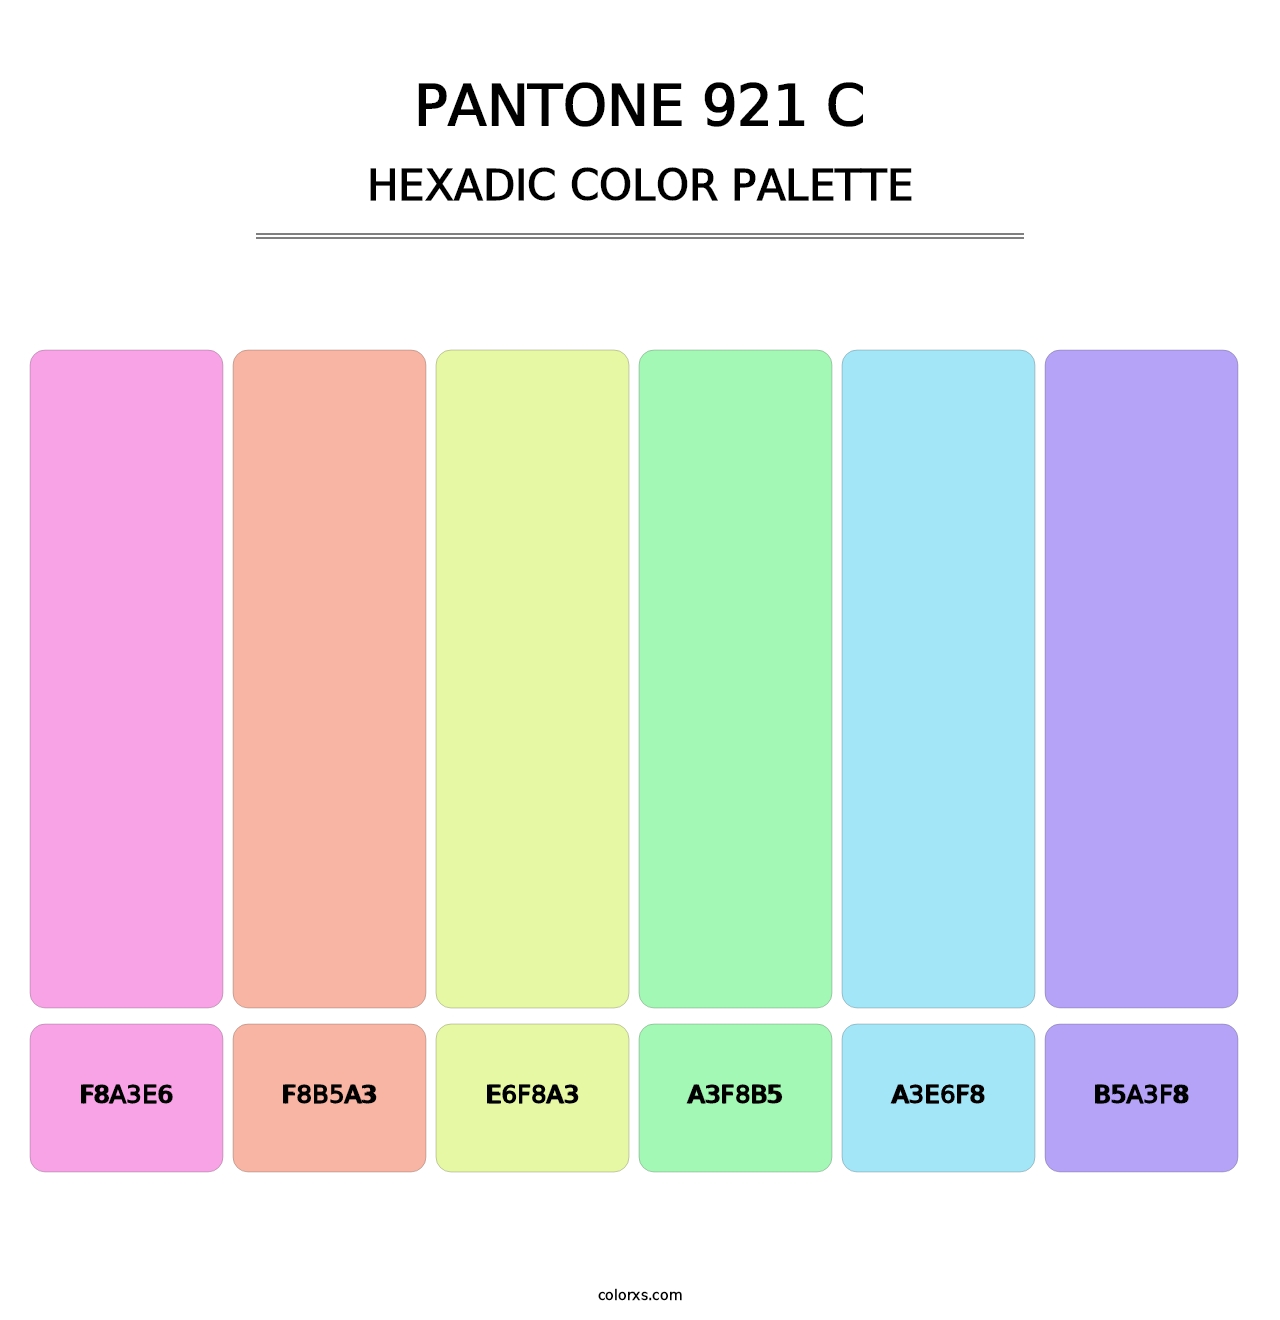 PANTONE 921 C - Hexadic Color Palette